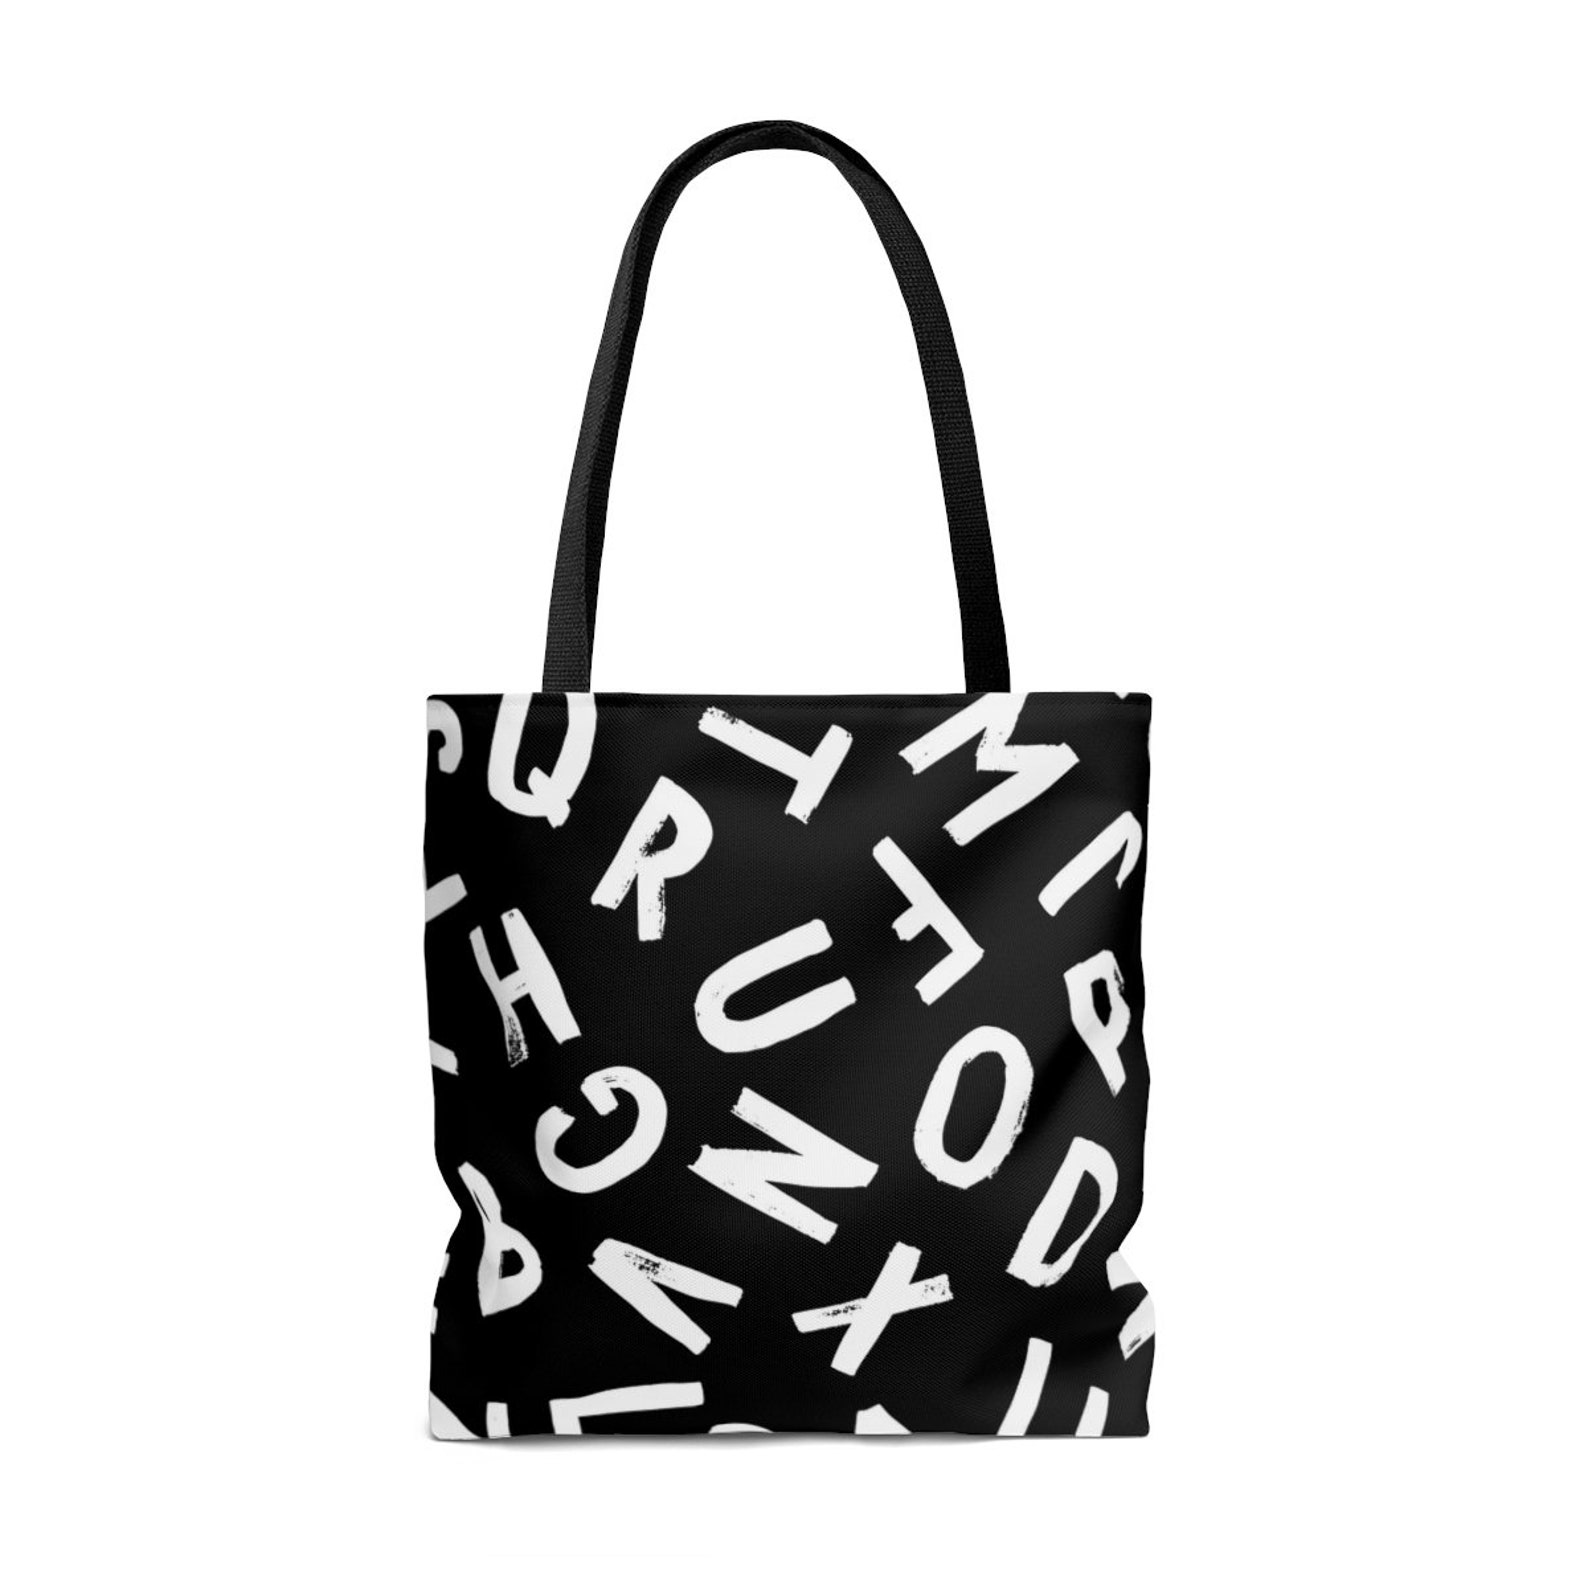 Typo Bag large tote bag black & white beach tote monogram | Etsy